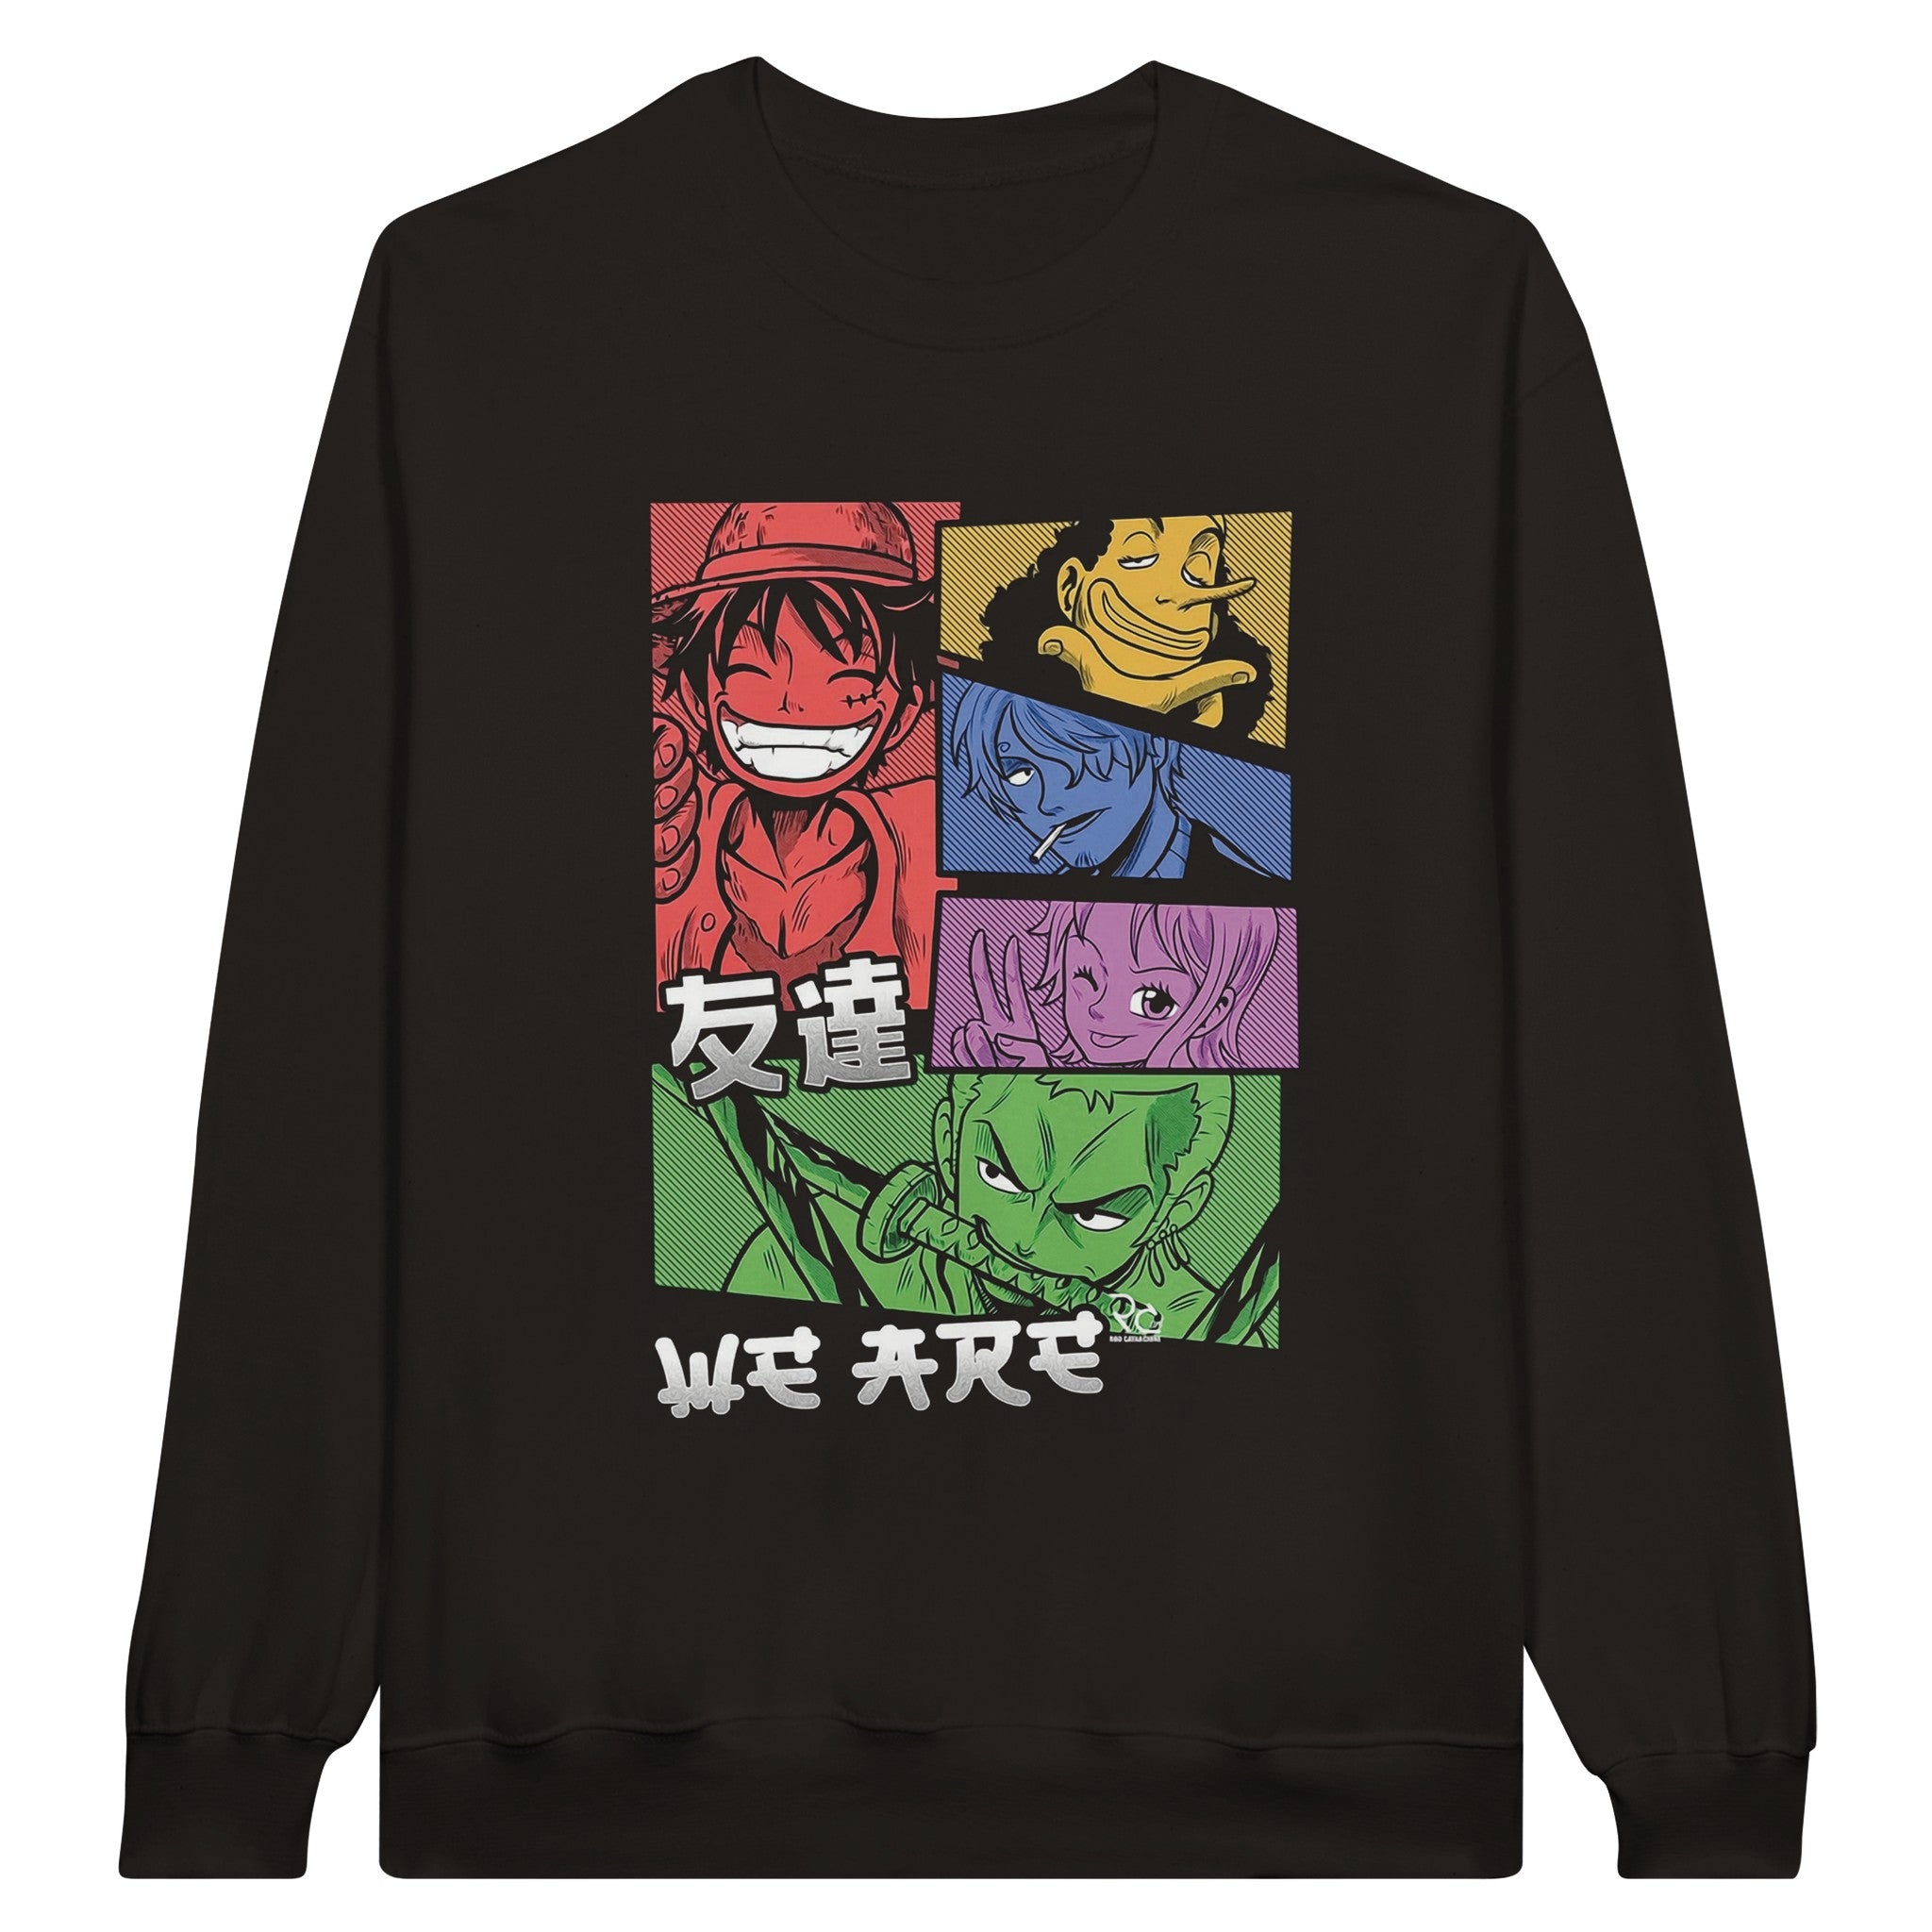 shop and buy one piece anime clothing sweatshirt/jumper/longsleeve